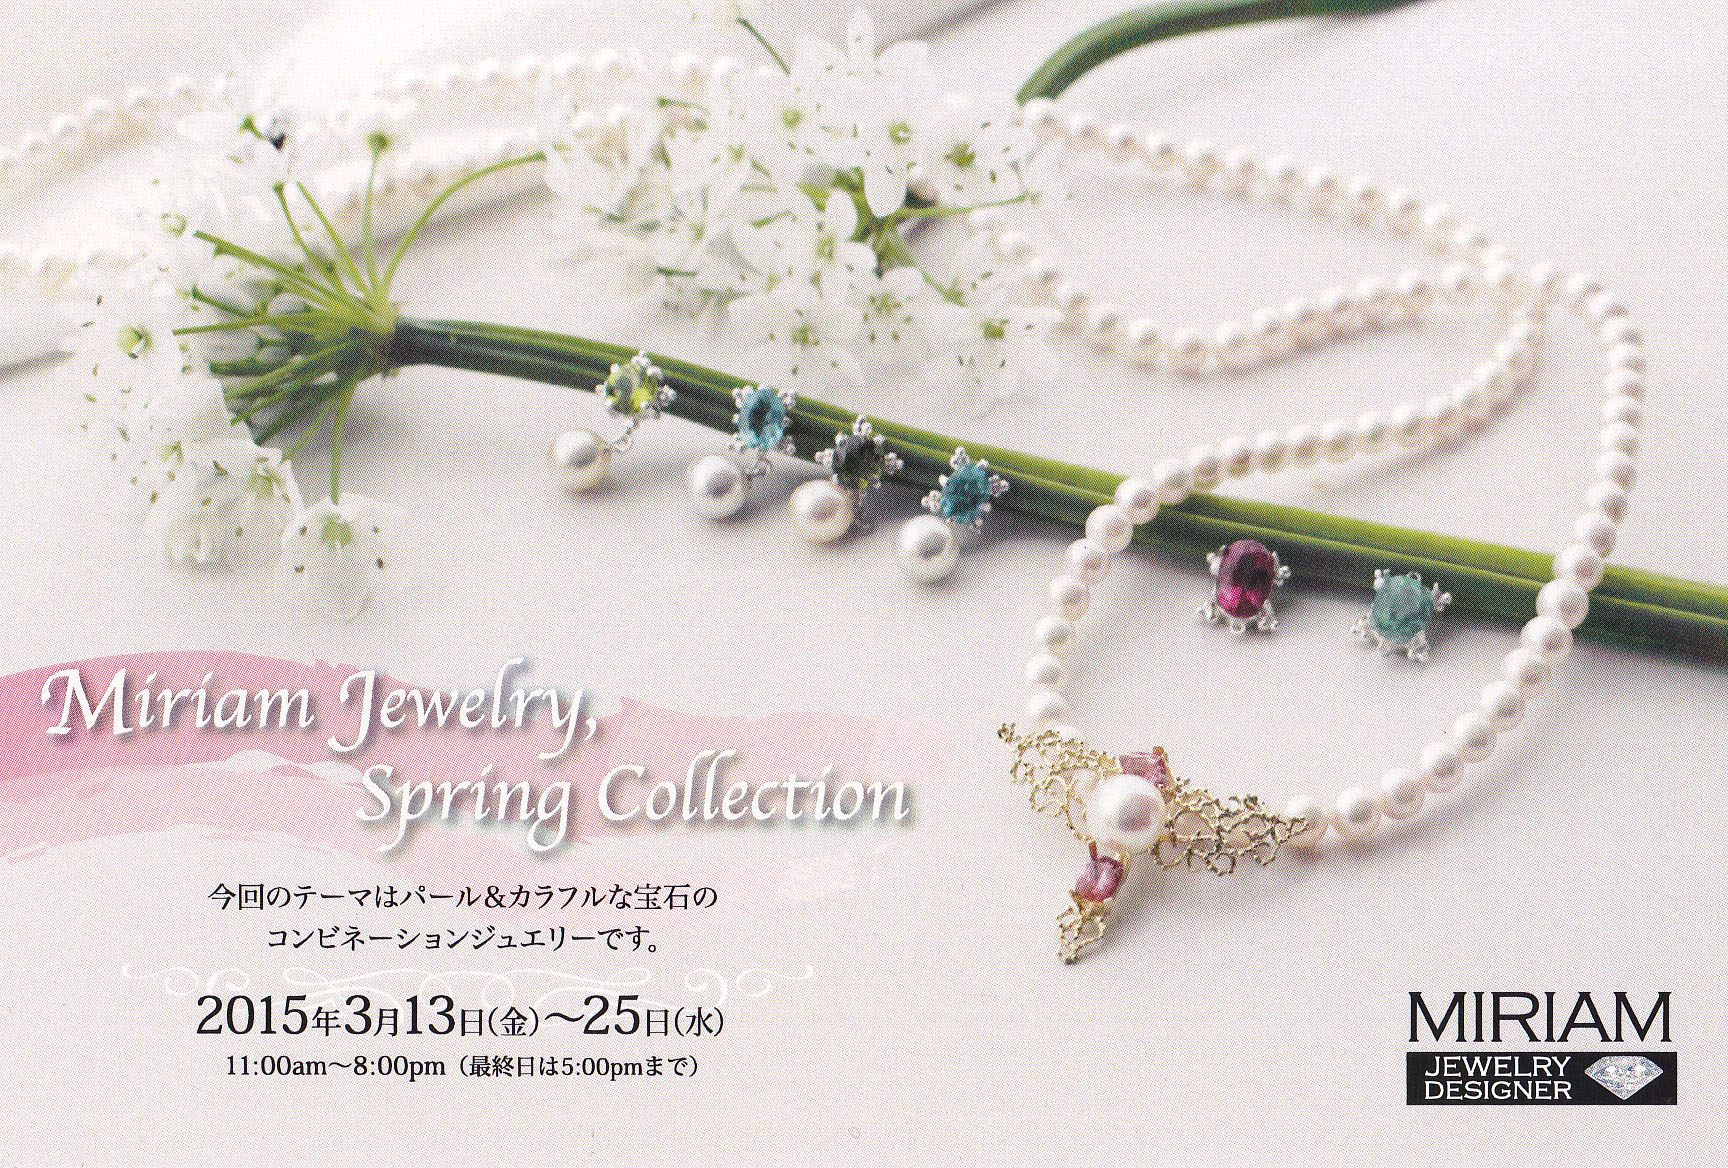 Miriam jewelry